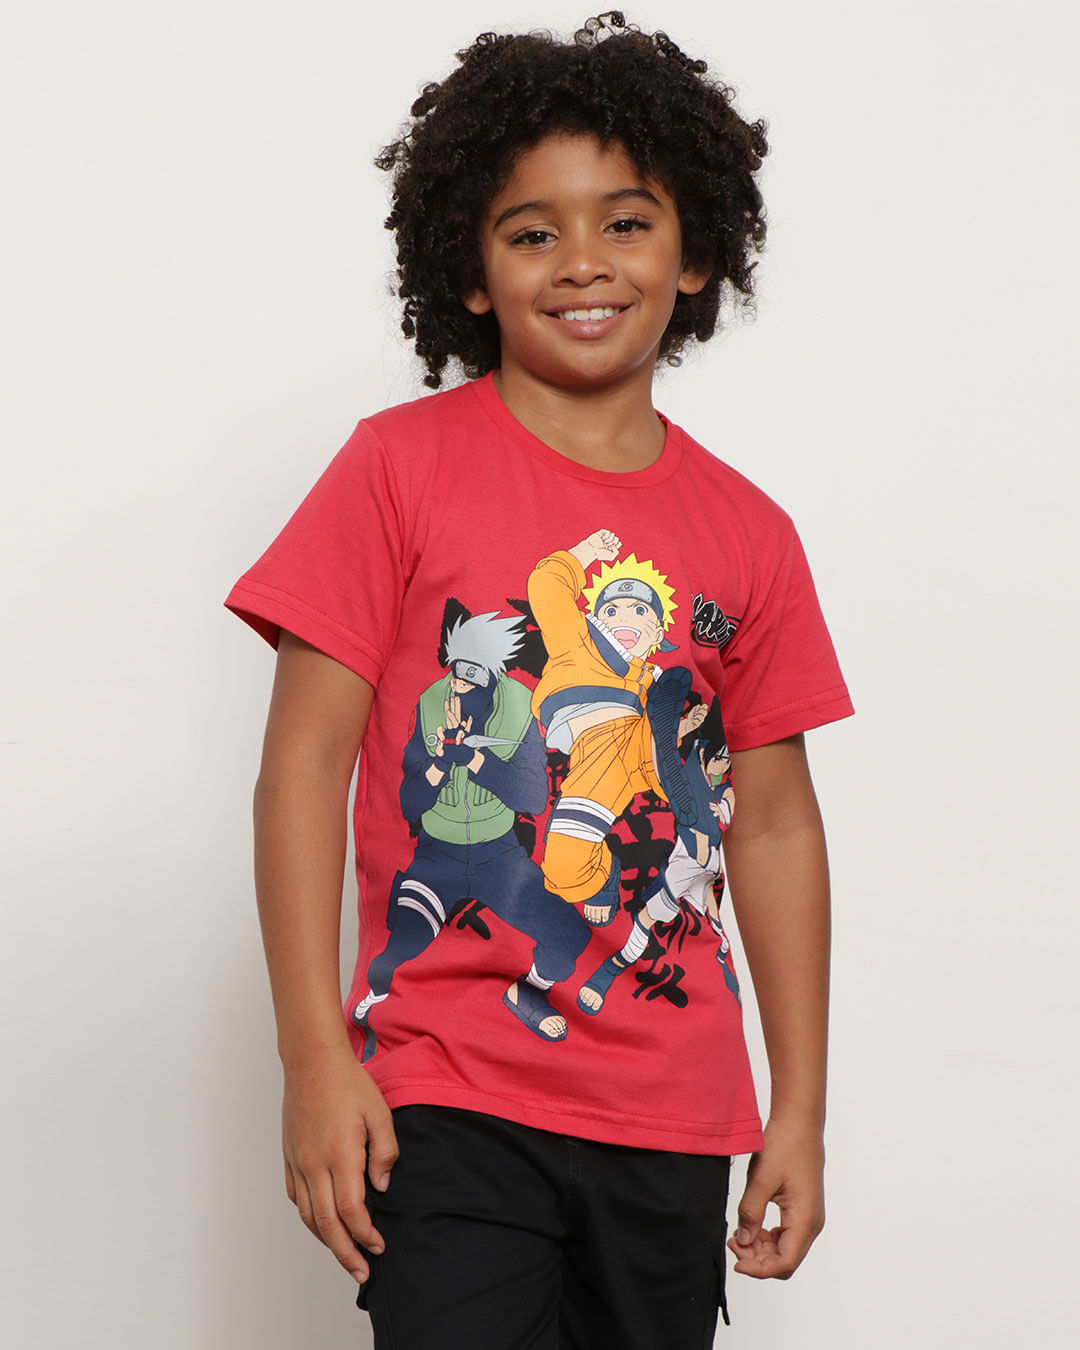 Camiseta Infantil Nuvem Vermelha - Preta